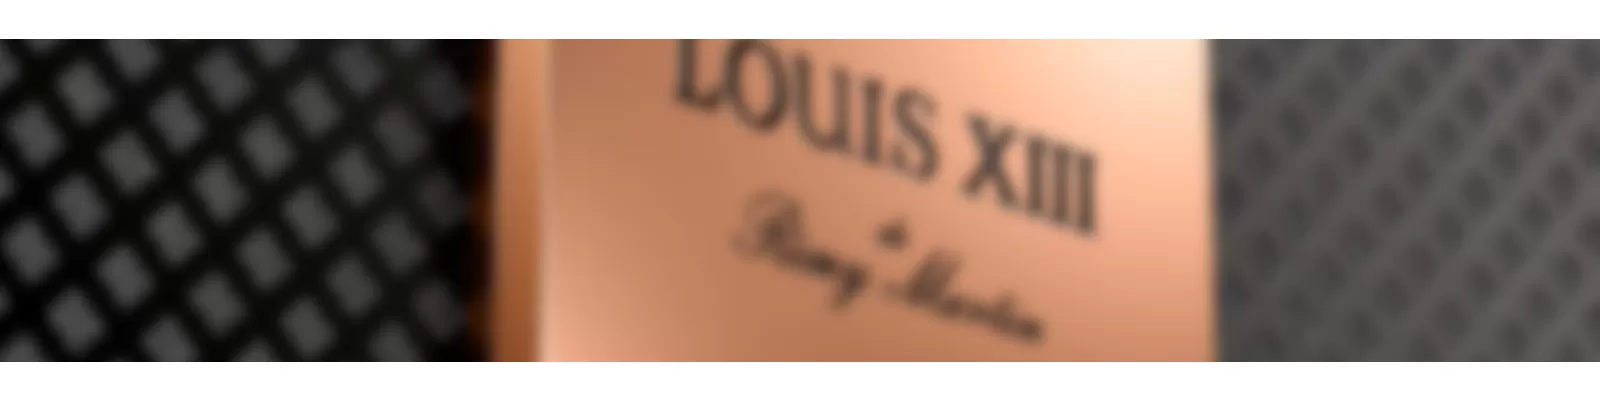 Louis Vuitton Christmas packaging  Louis vuitton gifts, Louis vuitton  watches, Louis vitton